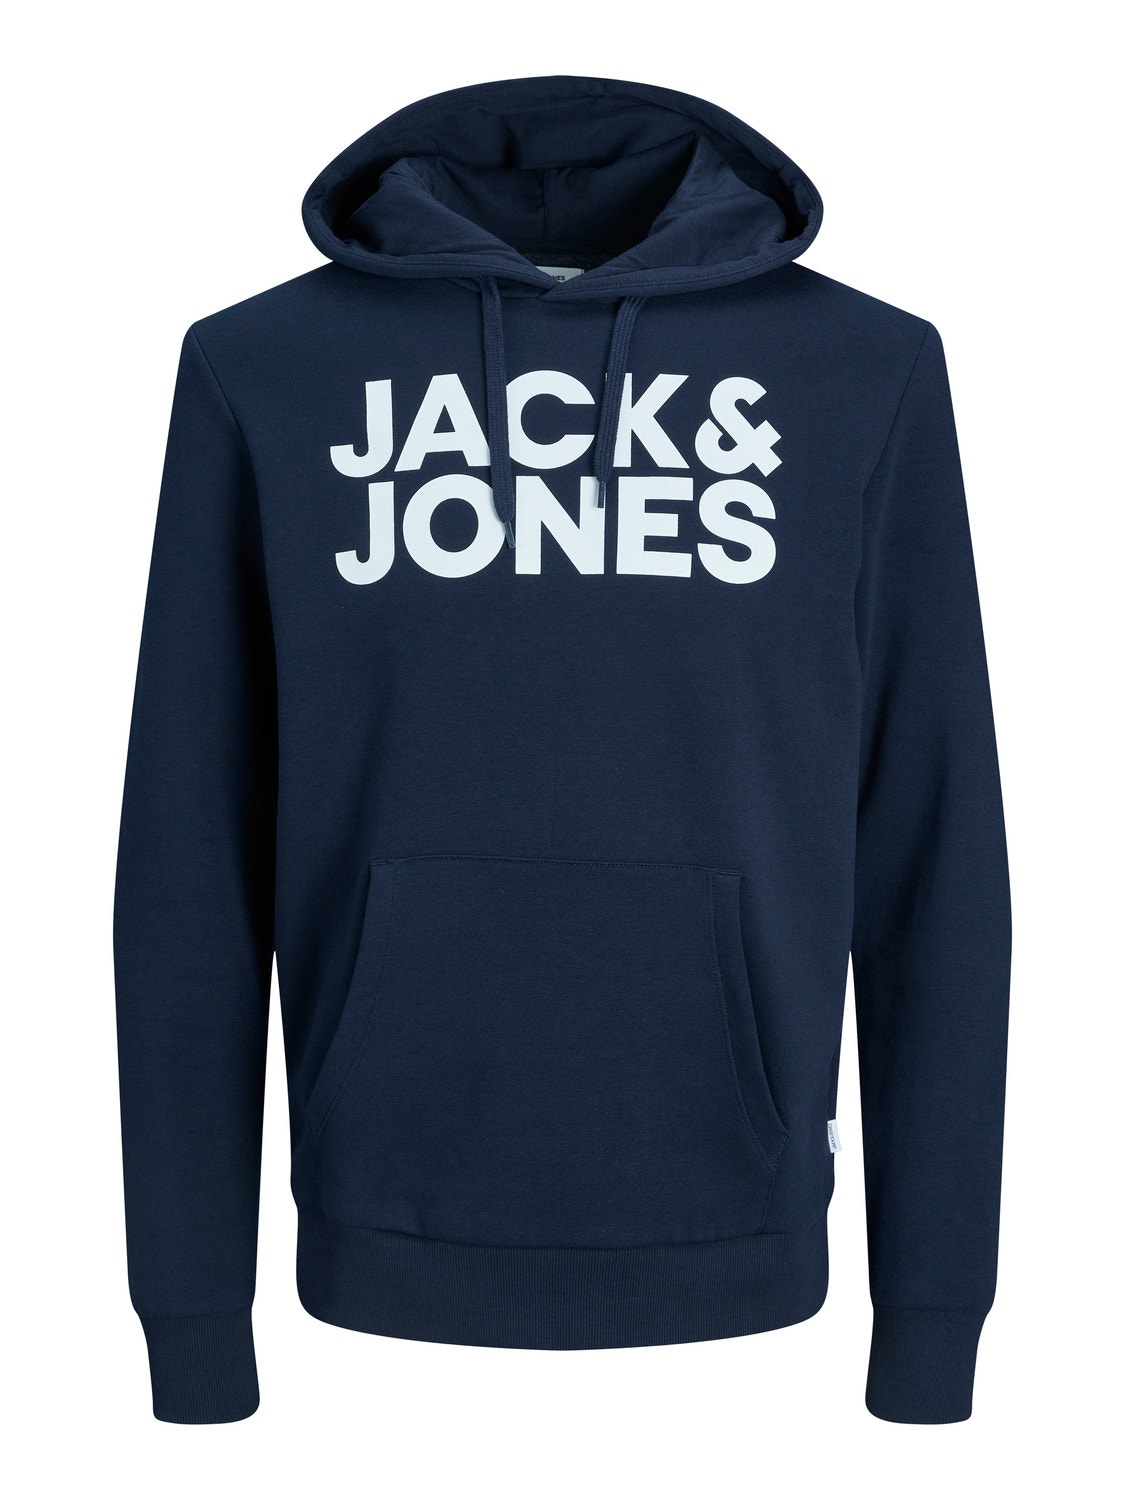 Jack & Jones Z logo Bluza z kapturem -Navy Blazer - 12152840